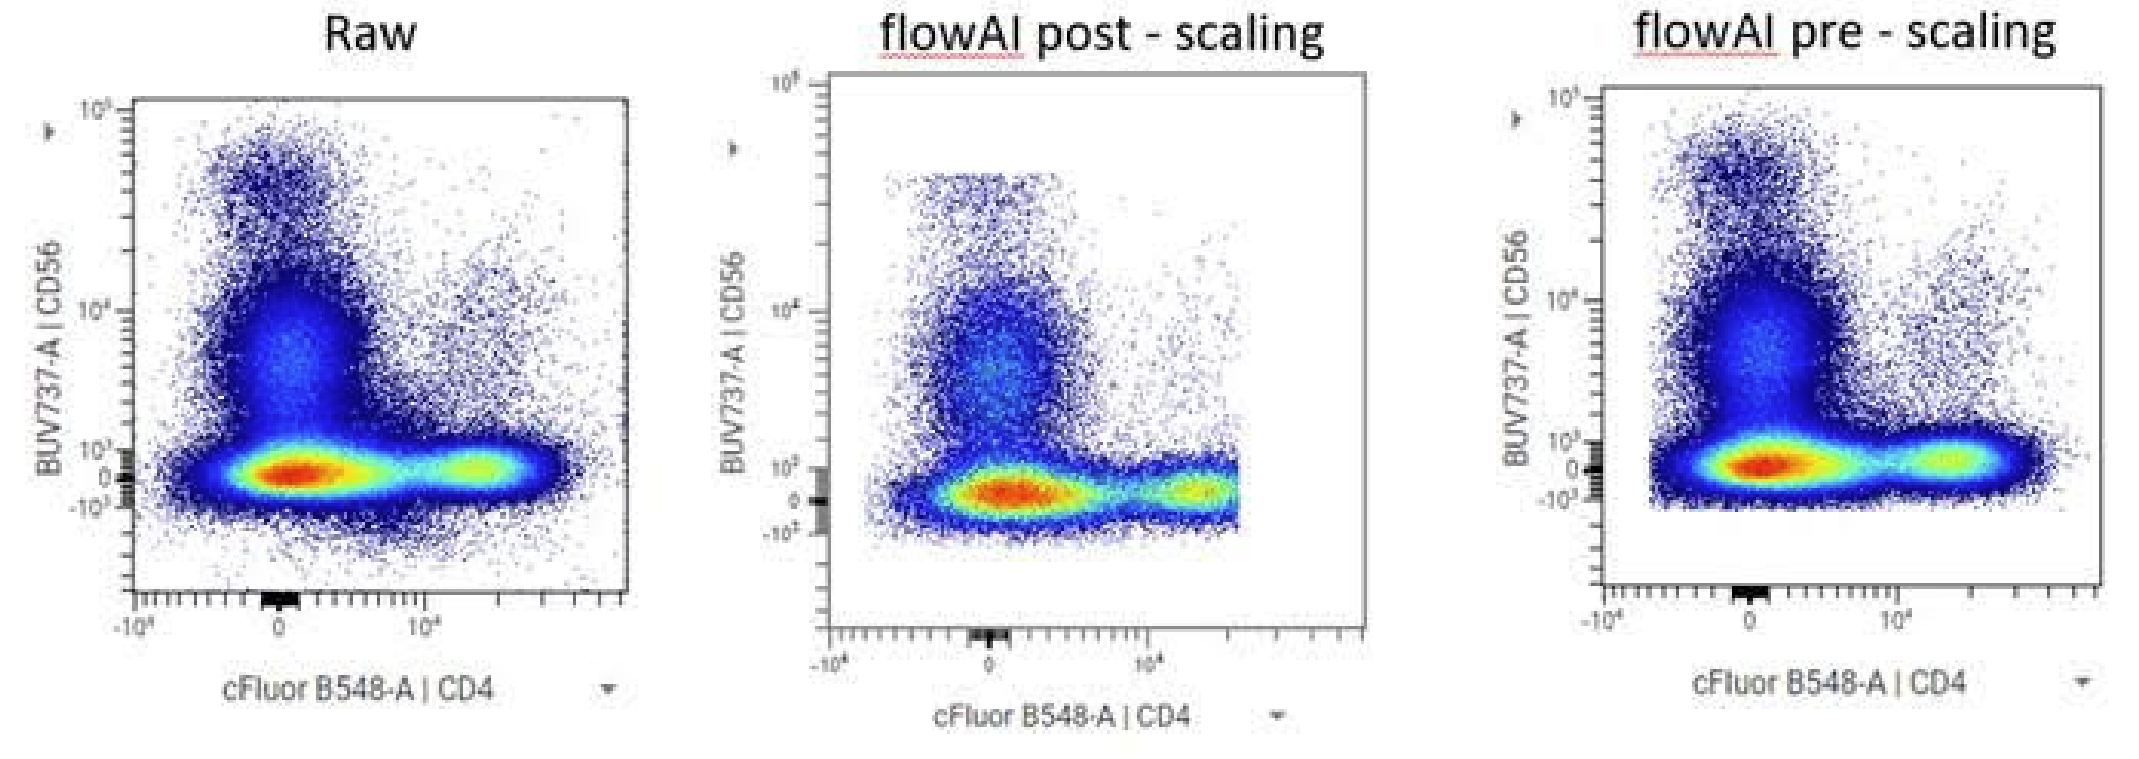 flowAI scaled data